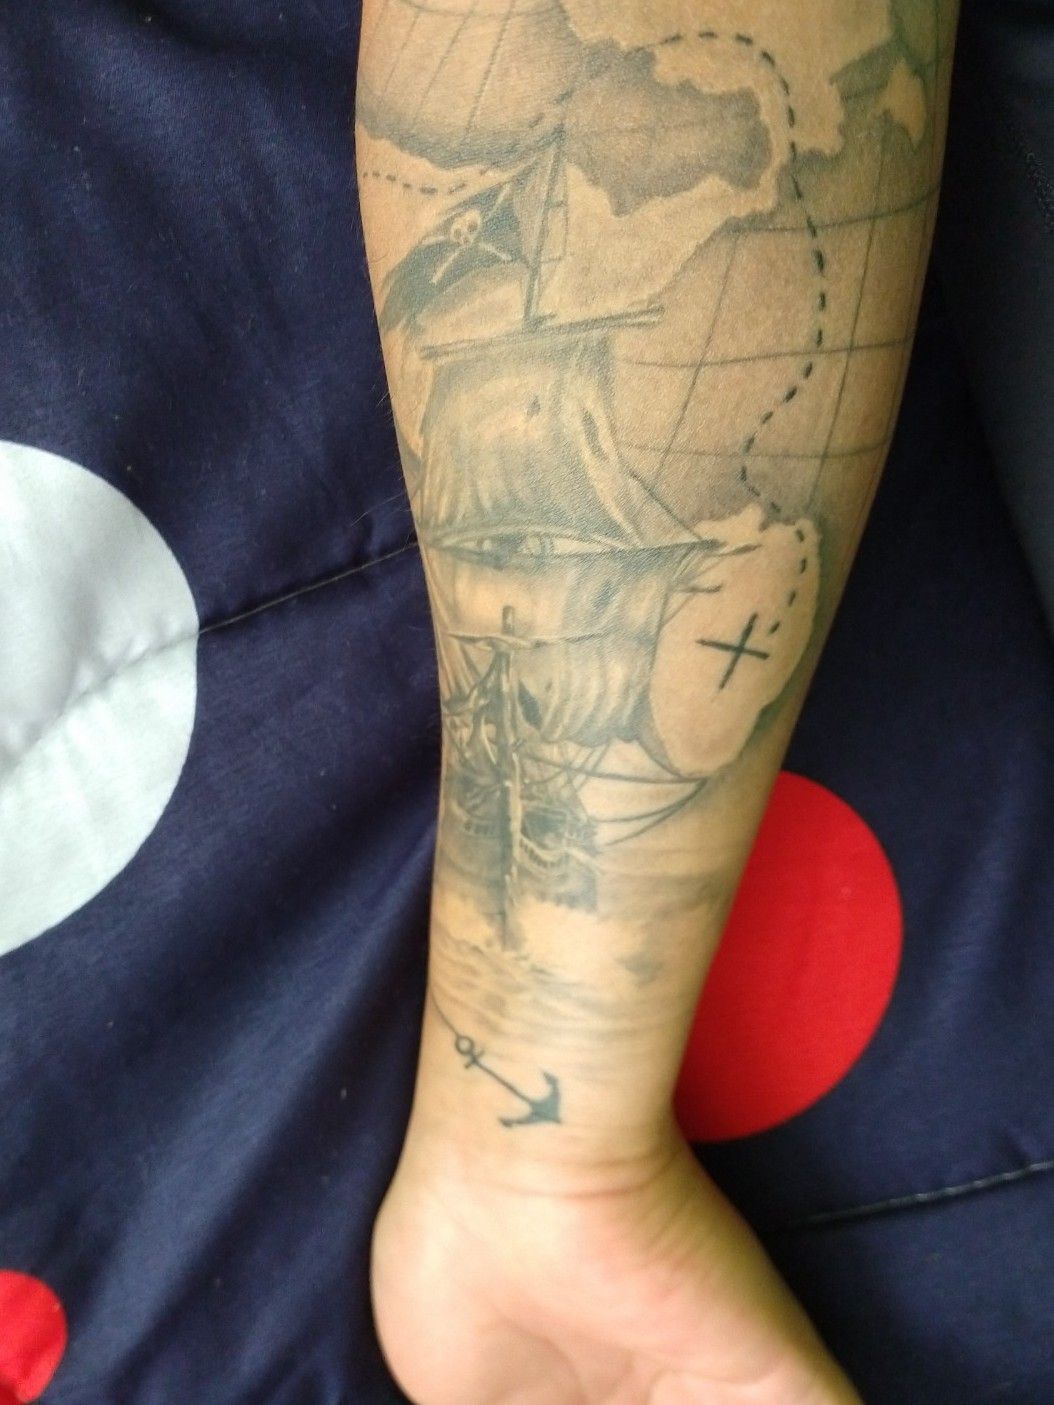 50 World Map Tattoo Designs For Men  Adventure The Globe